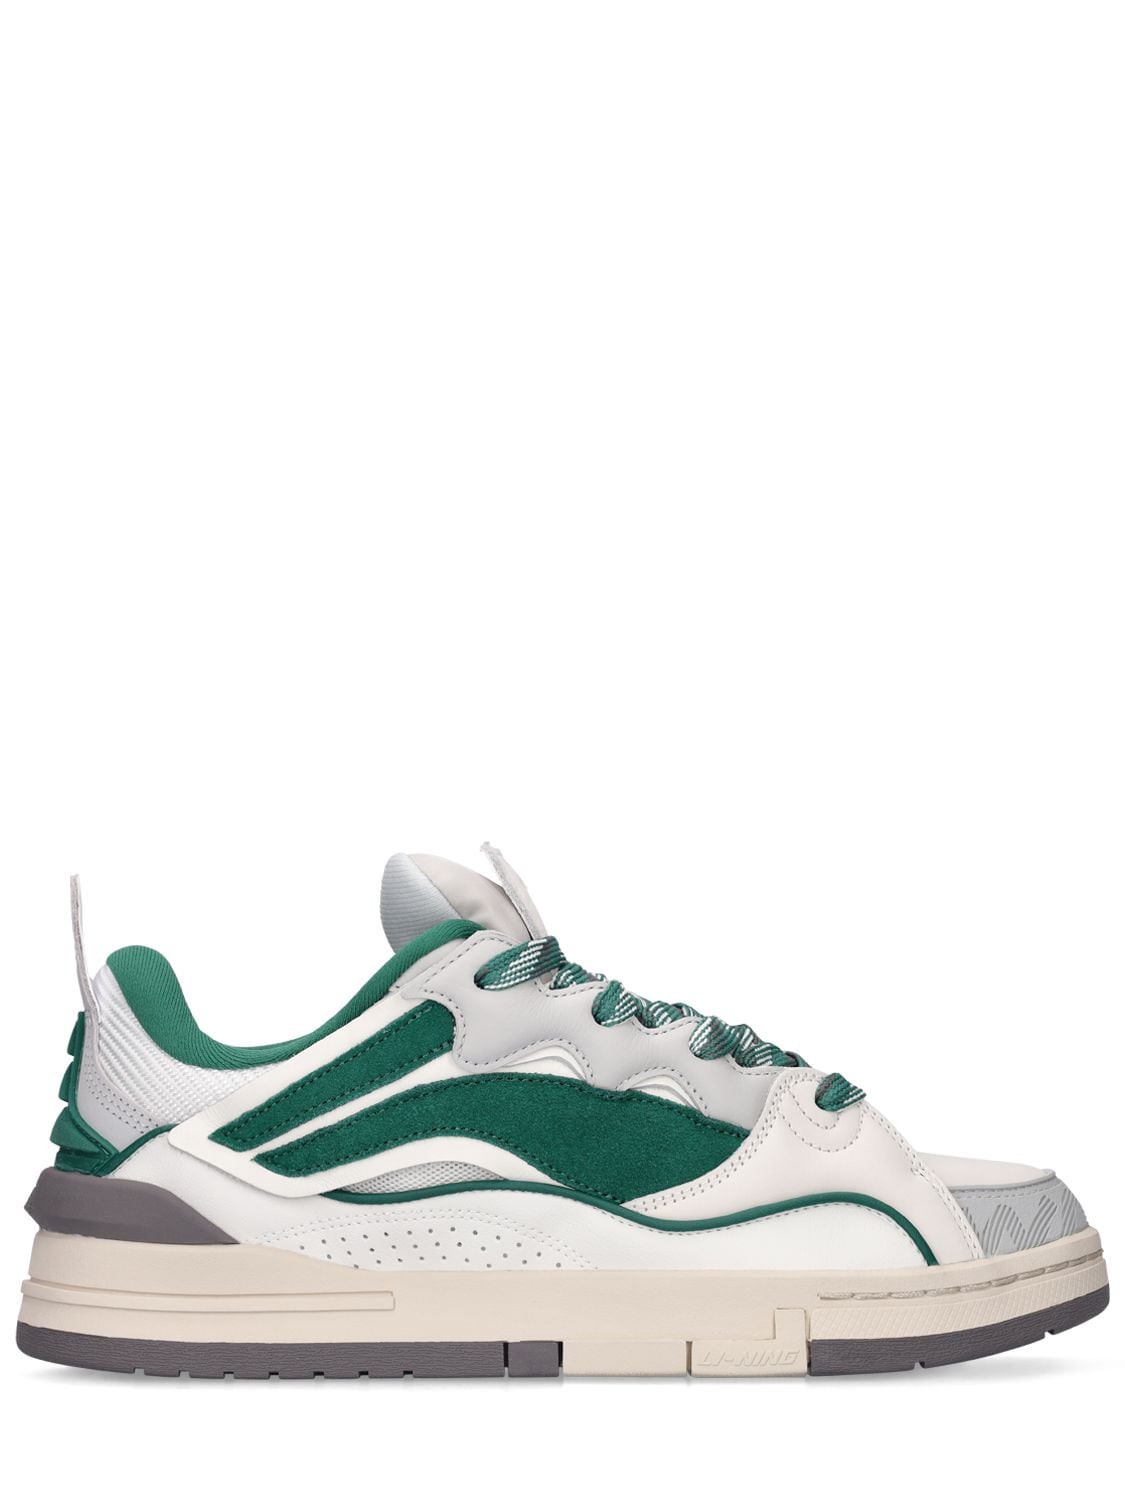 Li-ning Wave Golden Green Sneakers In Grey,green